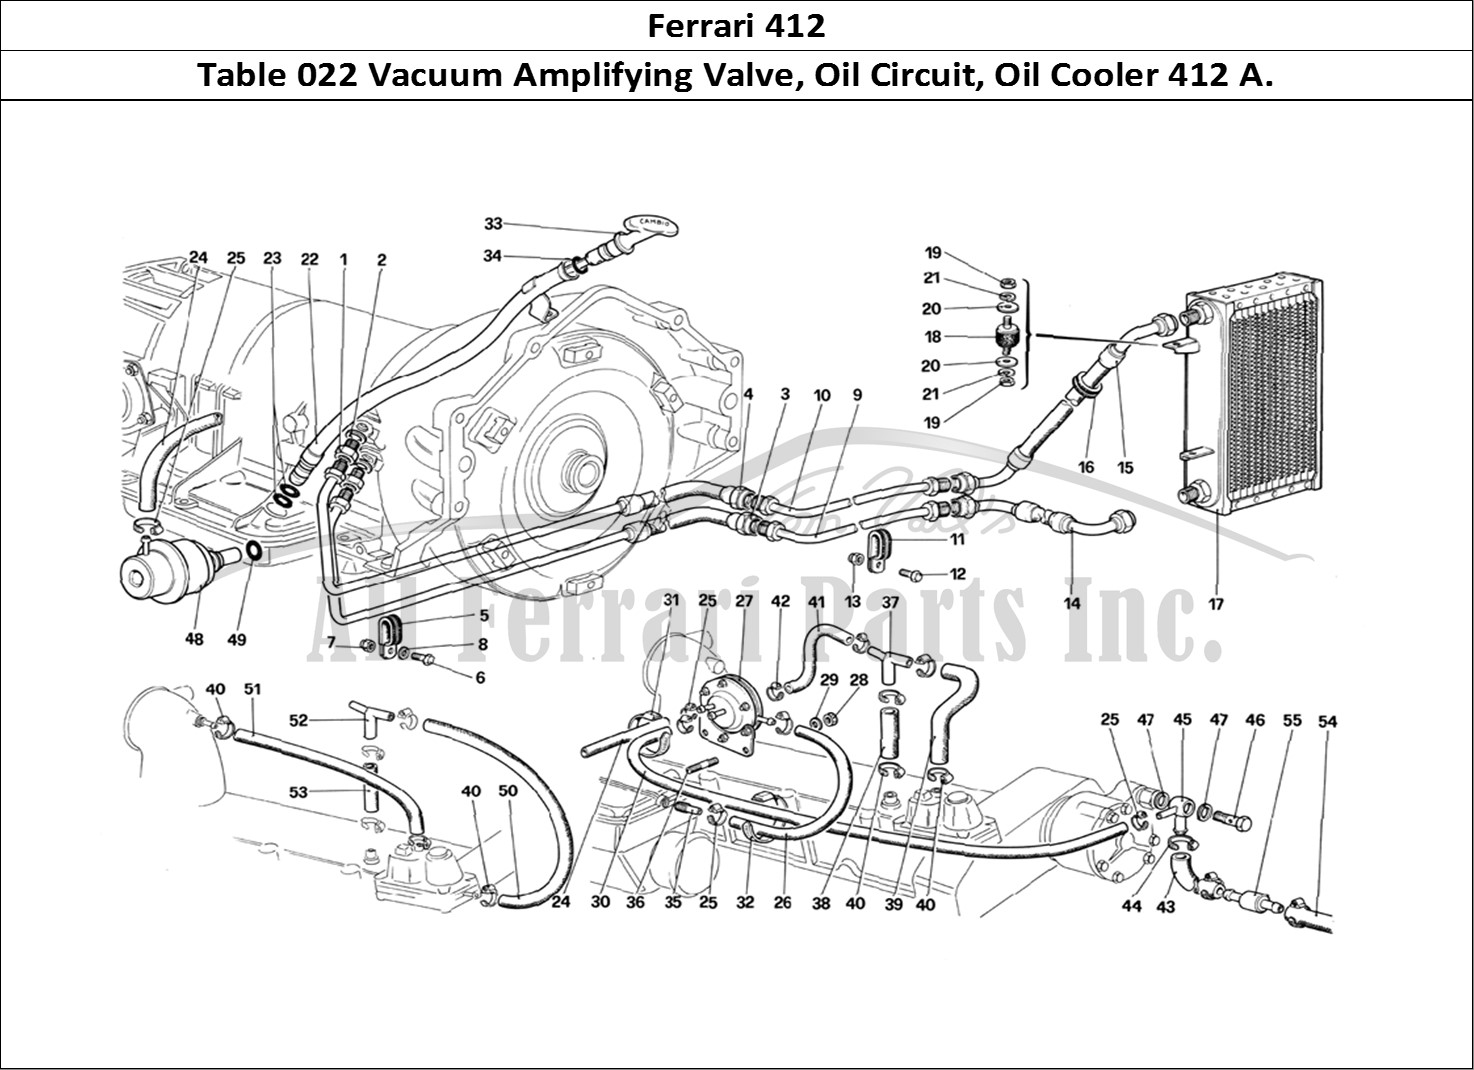 Ferrari Parts Ferrari 412 (Mechanical) Page 022 Vacuum Amplifying Valve a